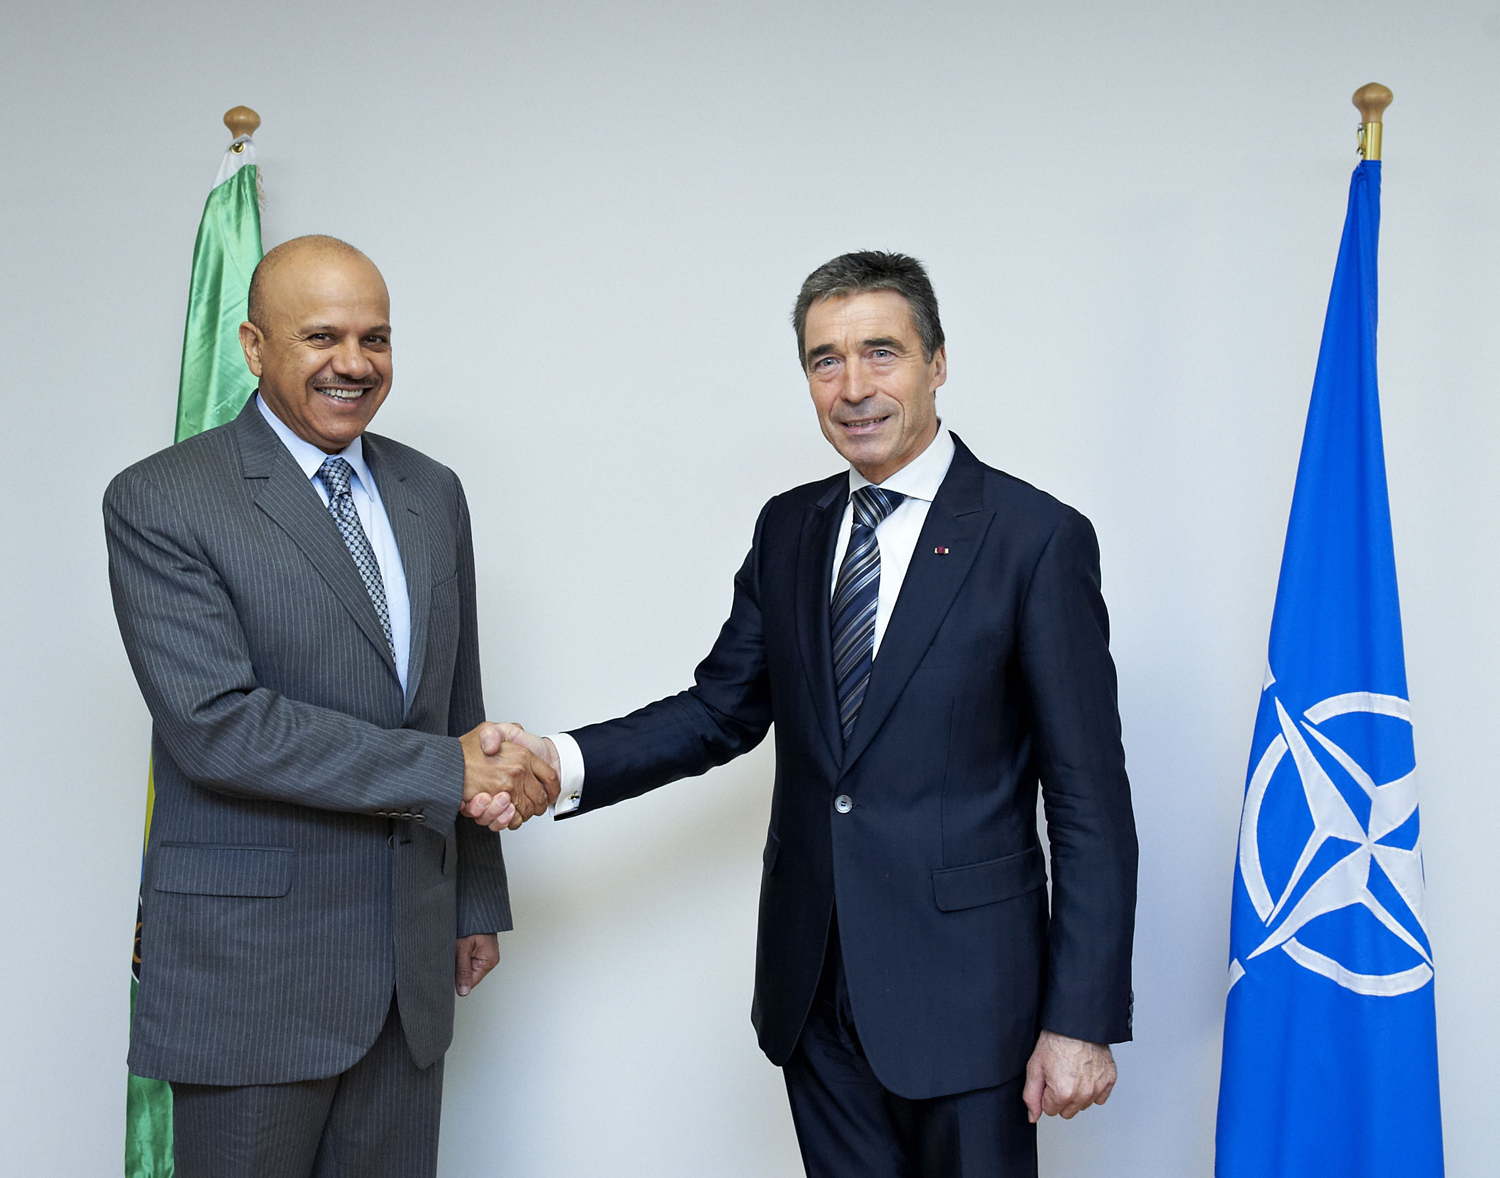 NATO Secretary General Anders Fogh Rasmussen, and the Secretary General of the Gulf Cooperation Council (GCC), Dr Adbullatif Al-Zayani